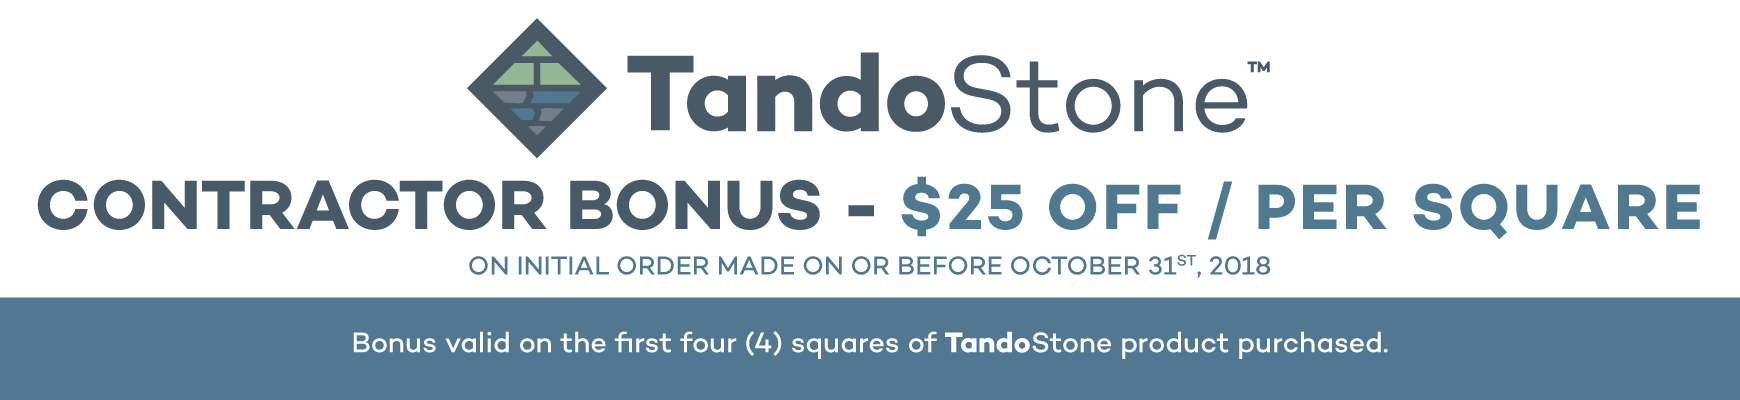 TandoStone_Campaign_ContractorRebate_WebHeader_1700x450-V2-ENG